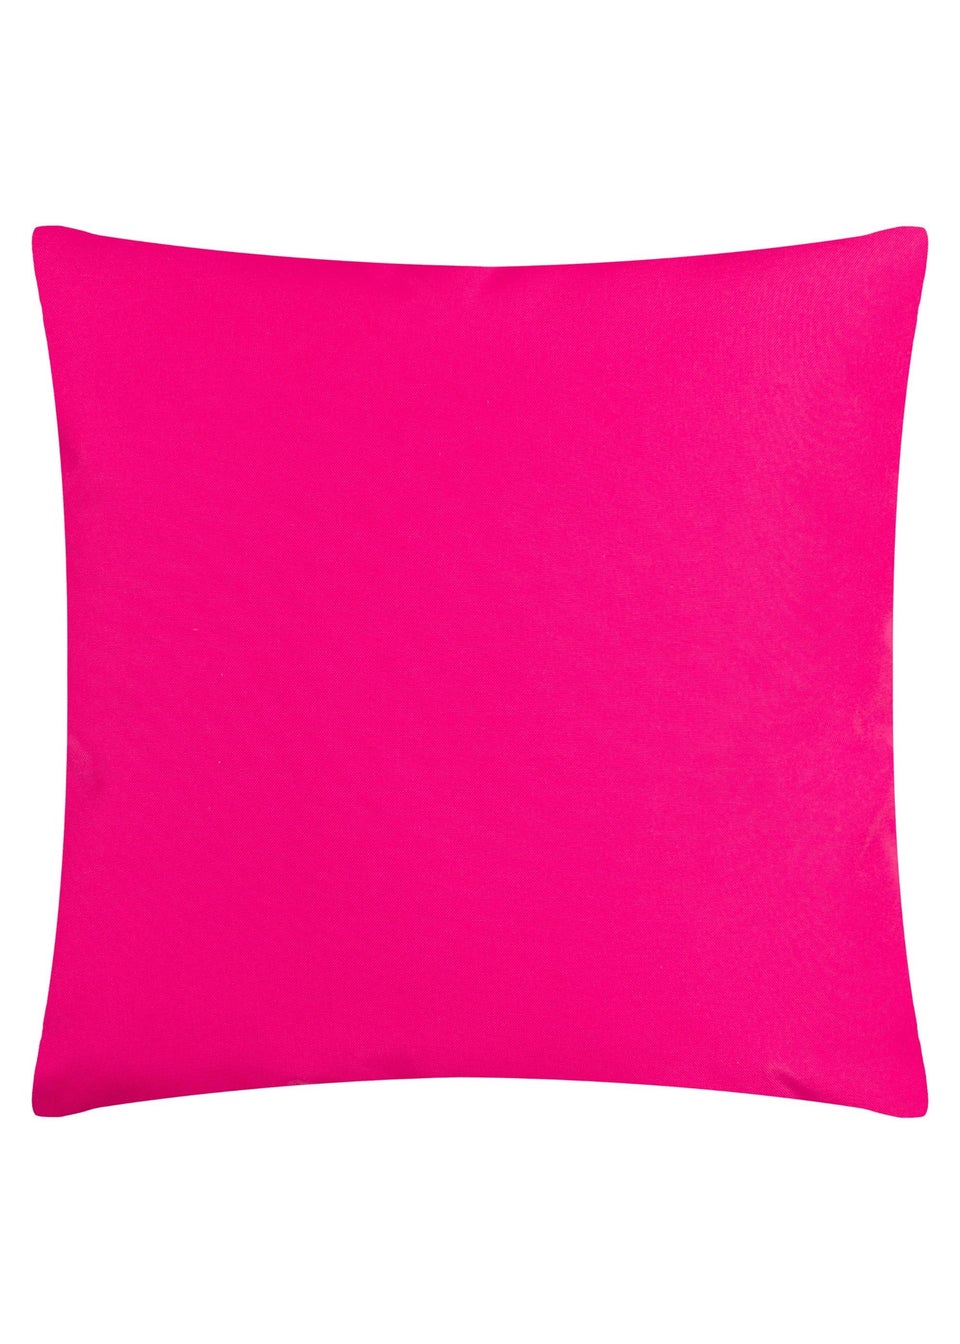 furn. Pink Cosmo O' Clock Filled Outdoor Cushions (43cm x 43cm x 8cm)